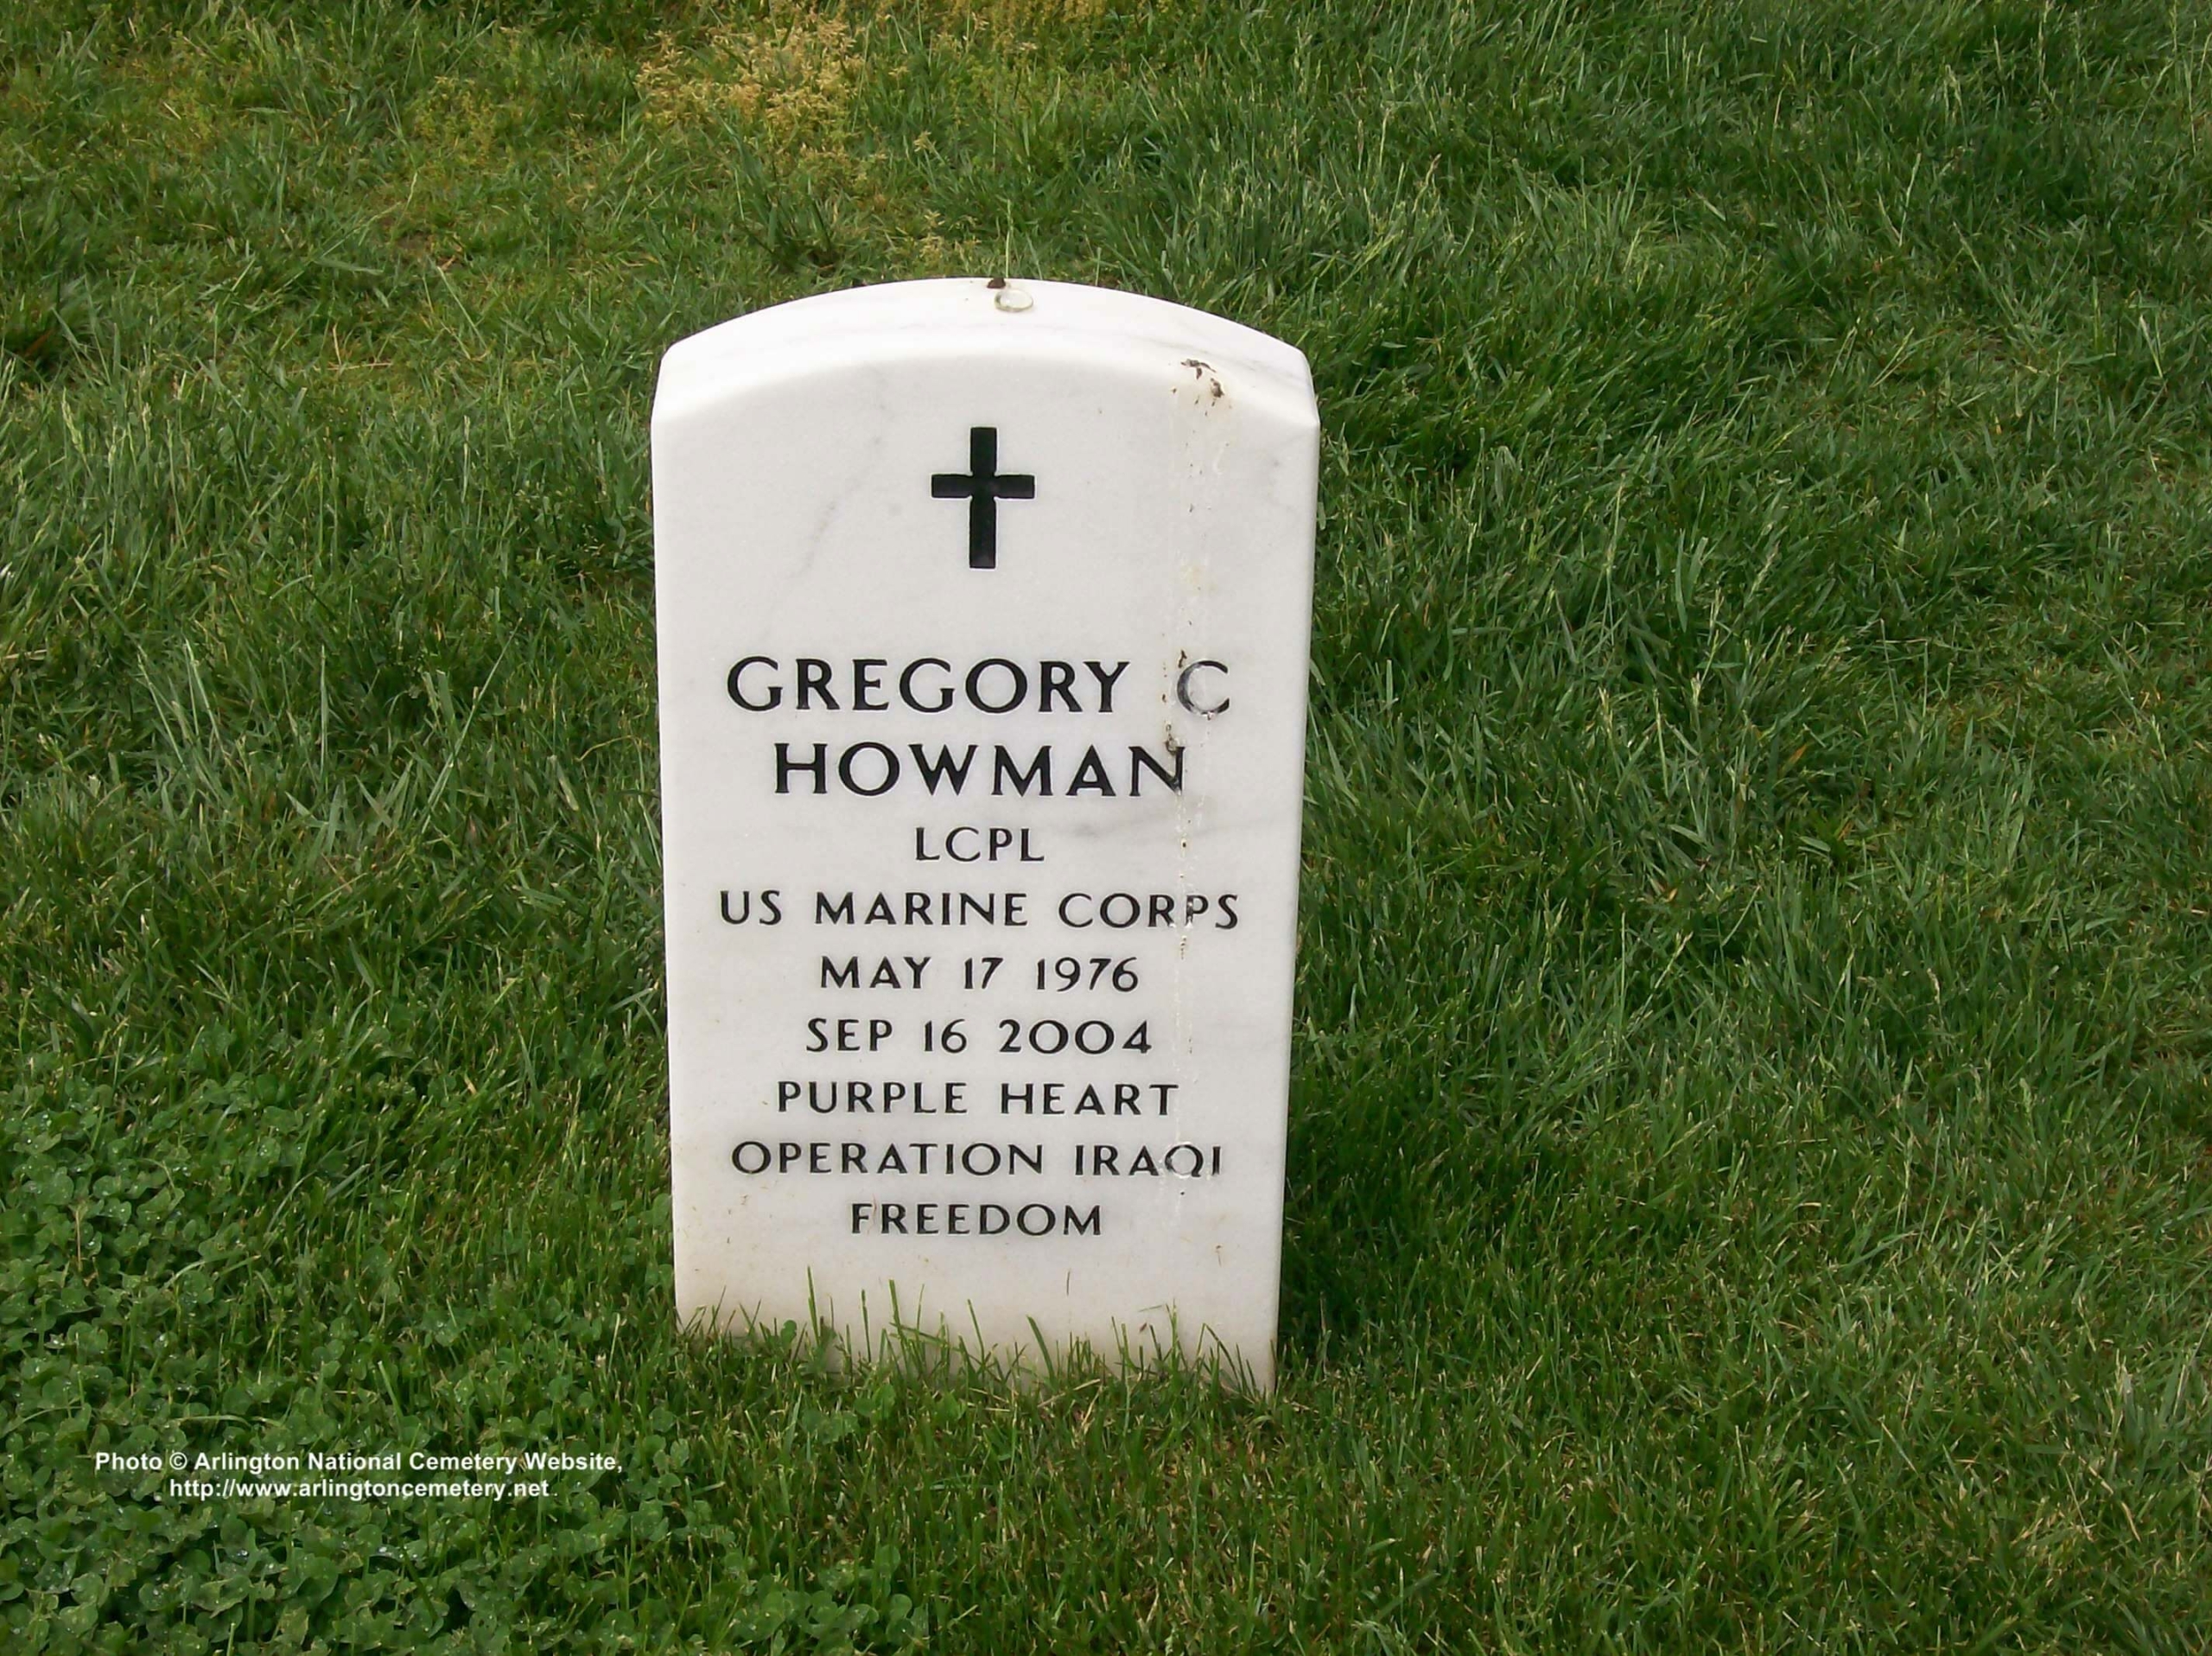 gchowman-gravesite-photo-may-2008-001